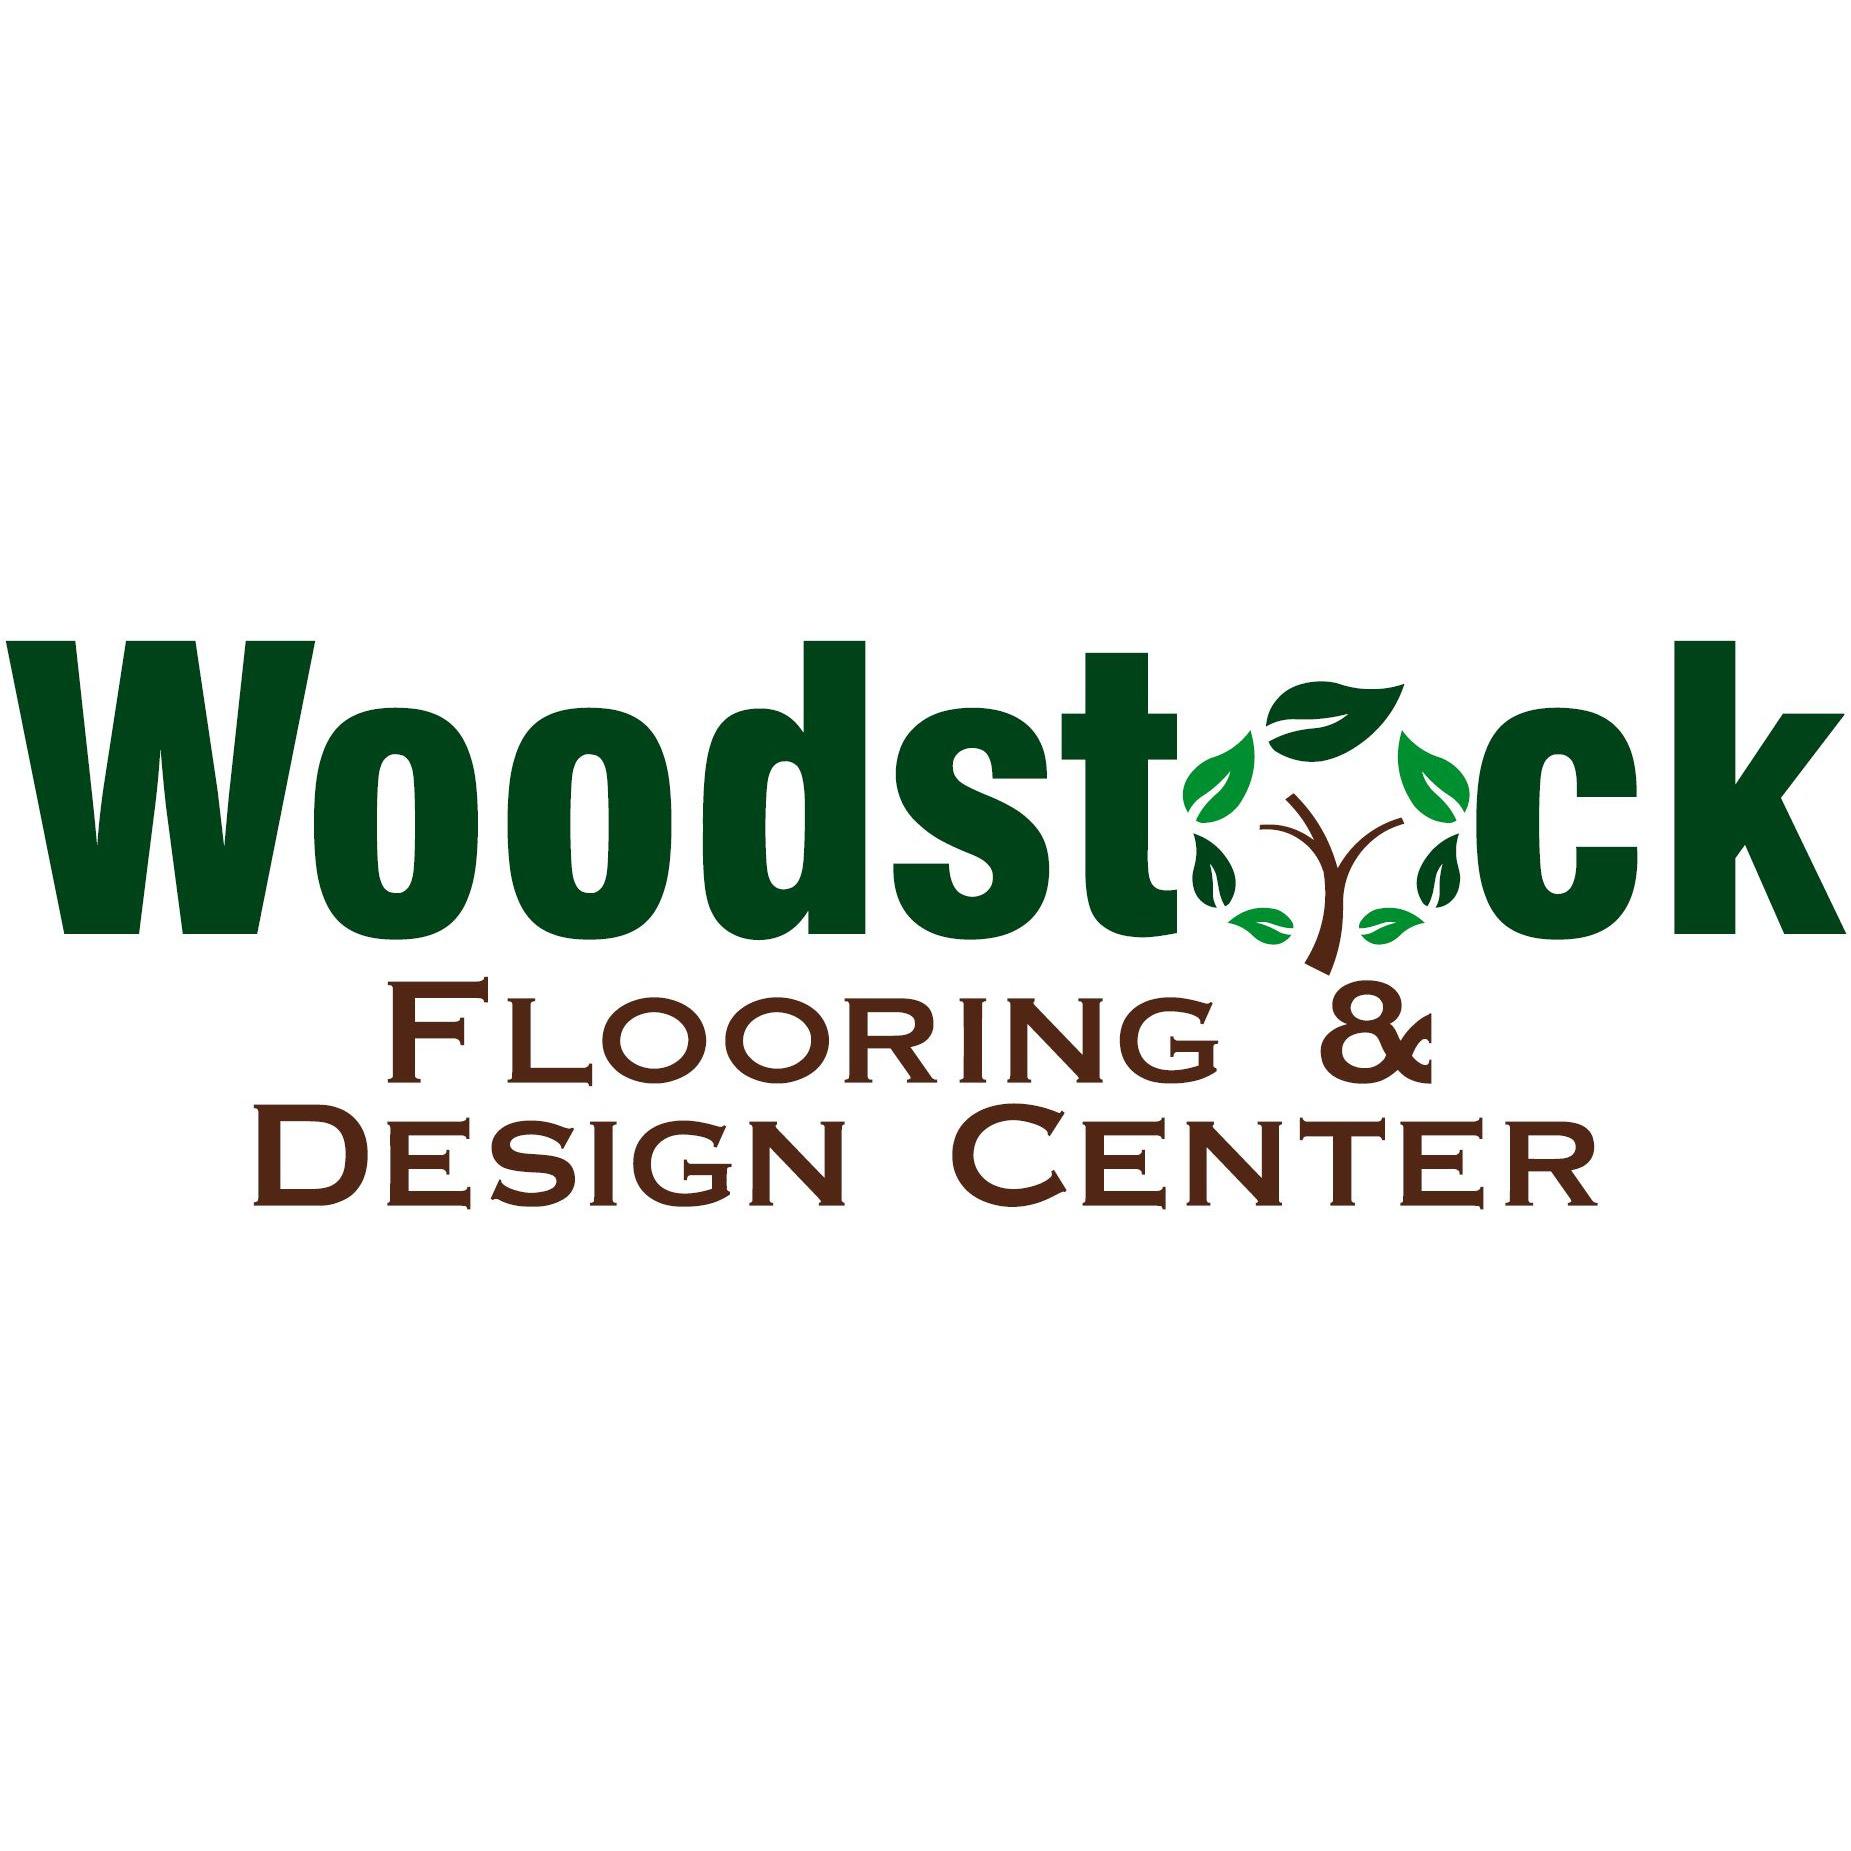 Woodstock Flooring & Design Center - Birnamwood, WI 54414 - (715)449-2279 | ShowMeLocal.com